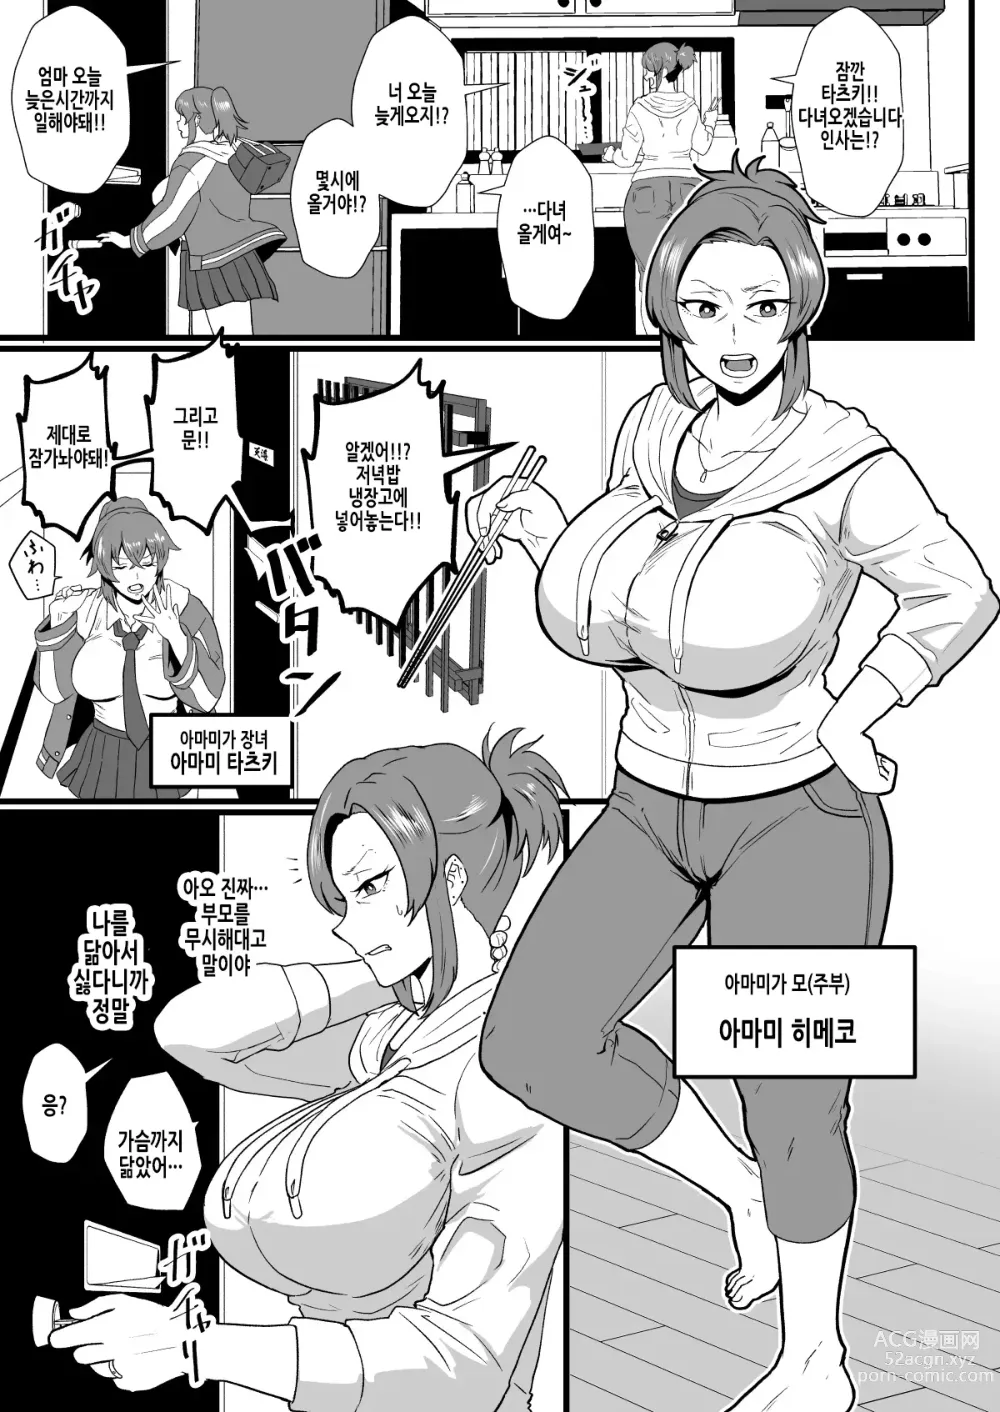 Page 3 of doujinshi 「이런게 바람일리가 없잖아」 ※양키엄마 아마미 히메코는 최면중!